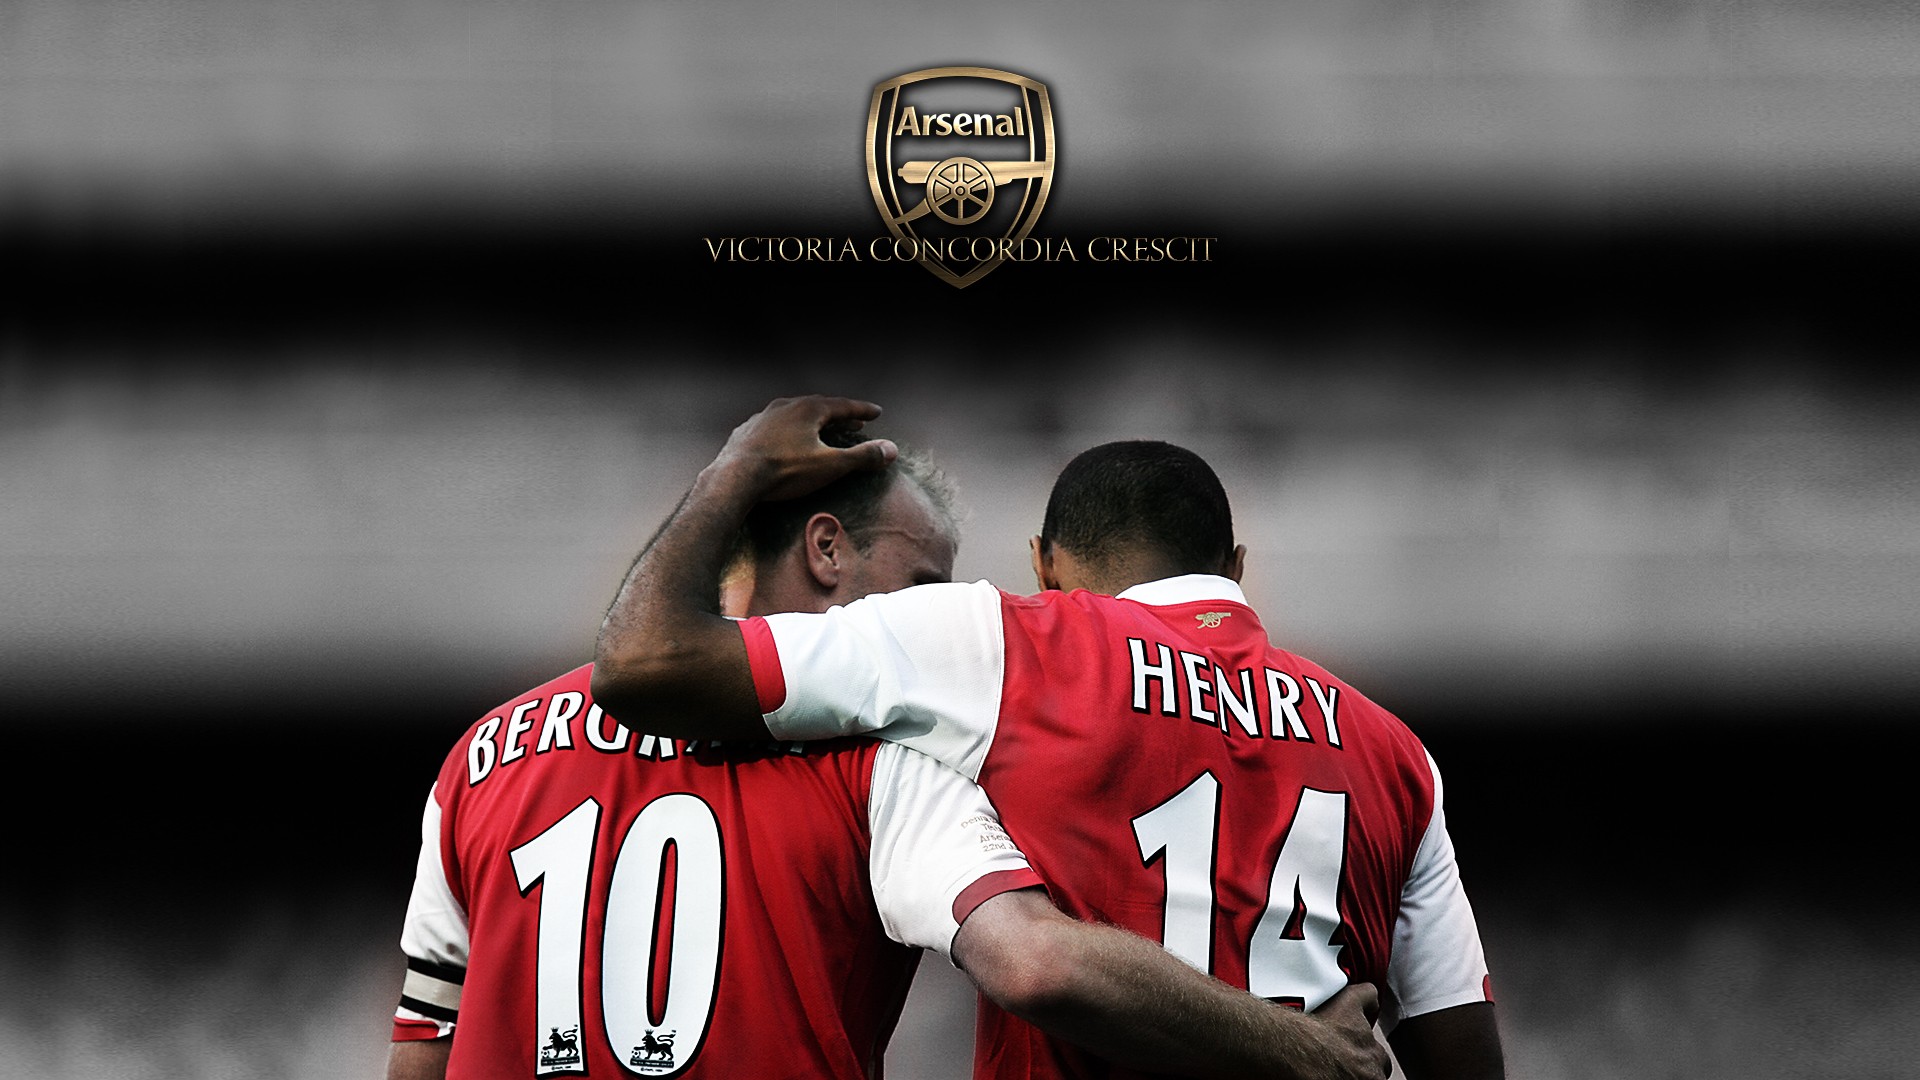 People 1920x1080 Arsenal FC London Thierry Henry Dennis Bergkamp soccer clubs legend footballers Premier League men